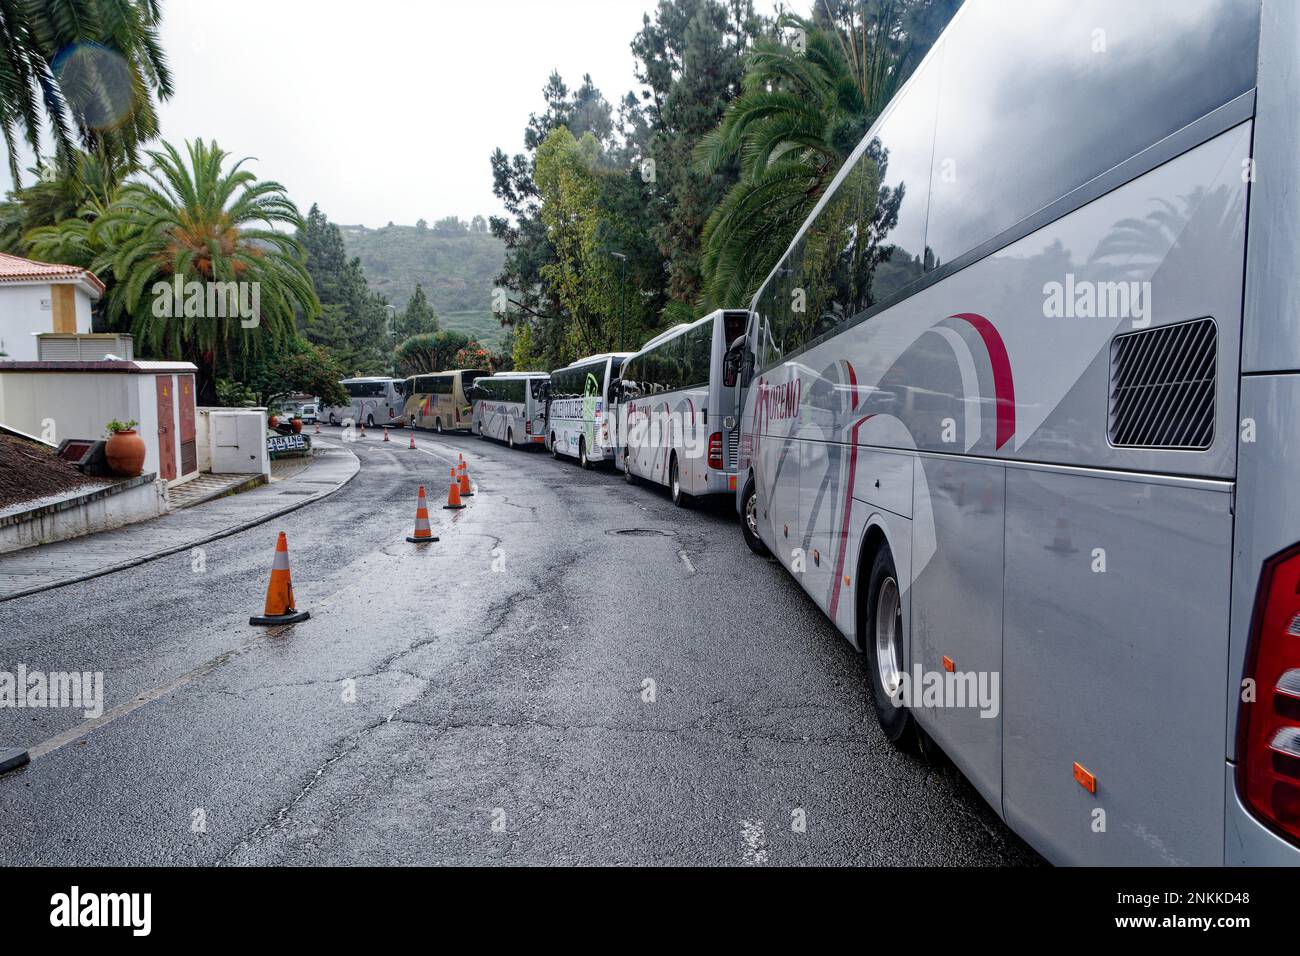 line of tour buses